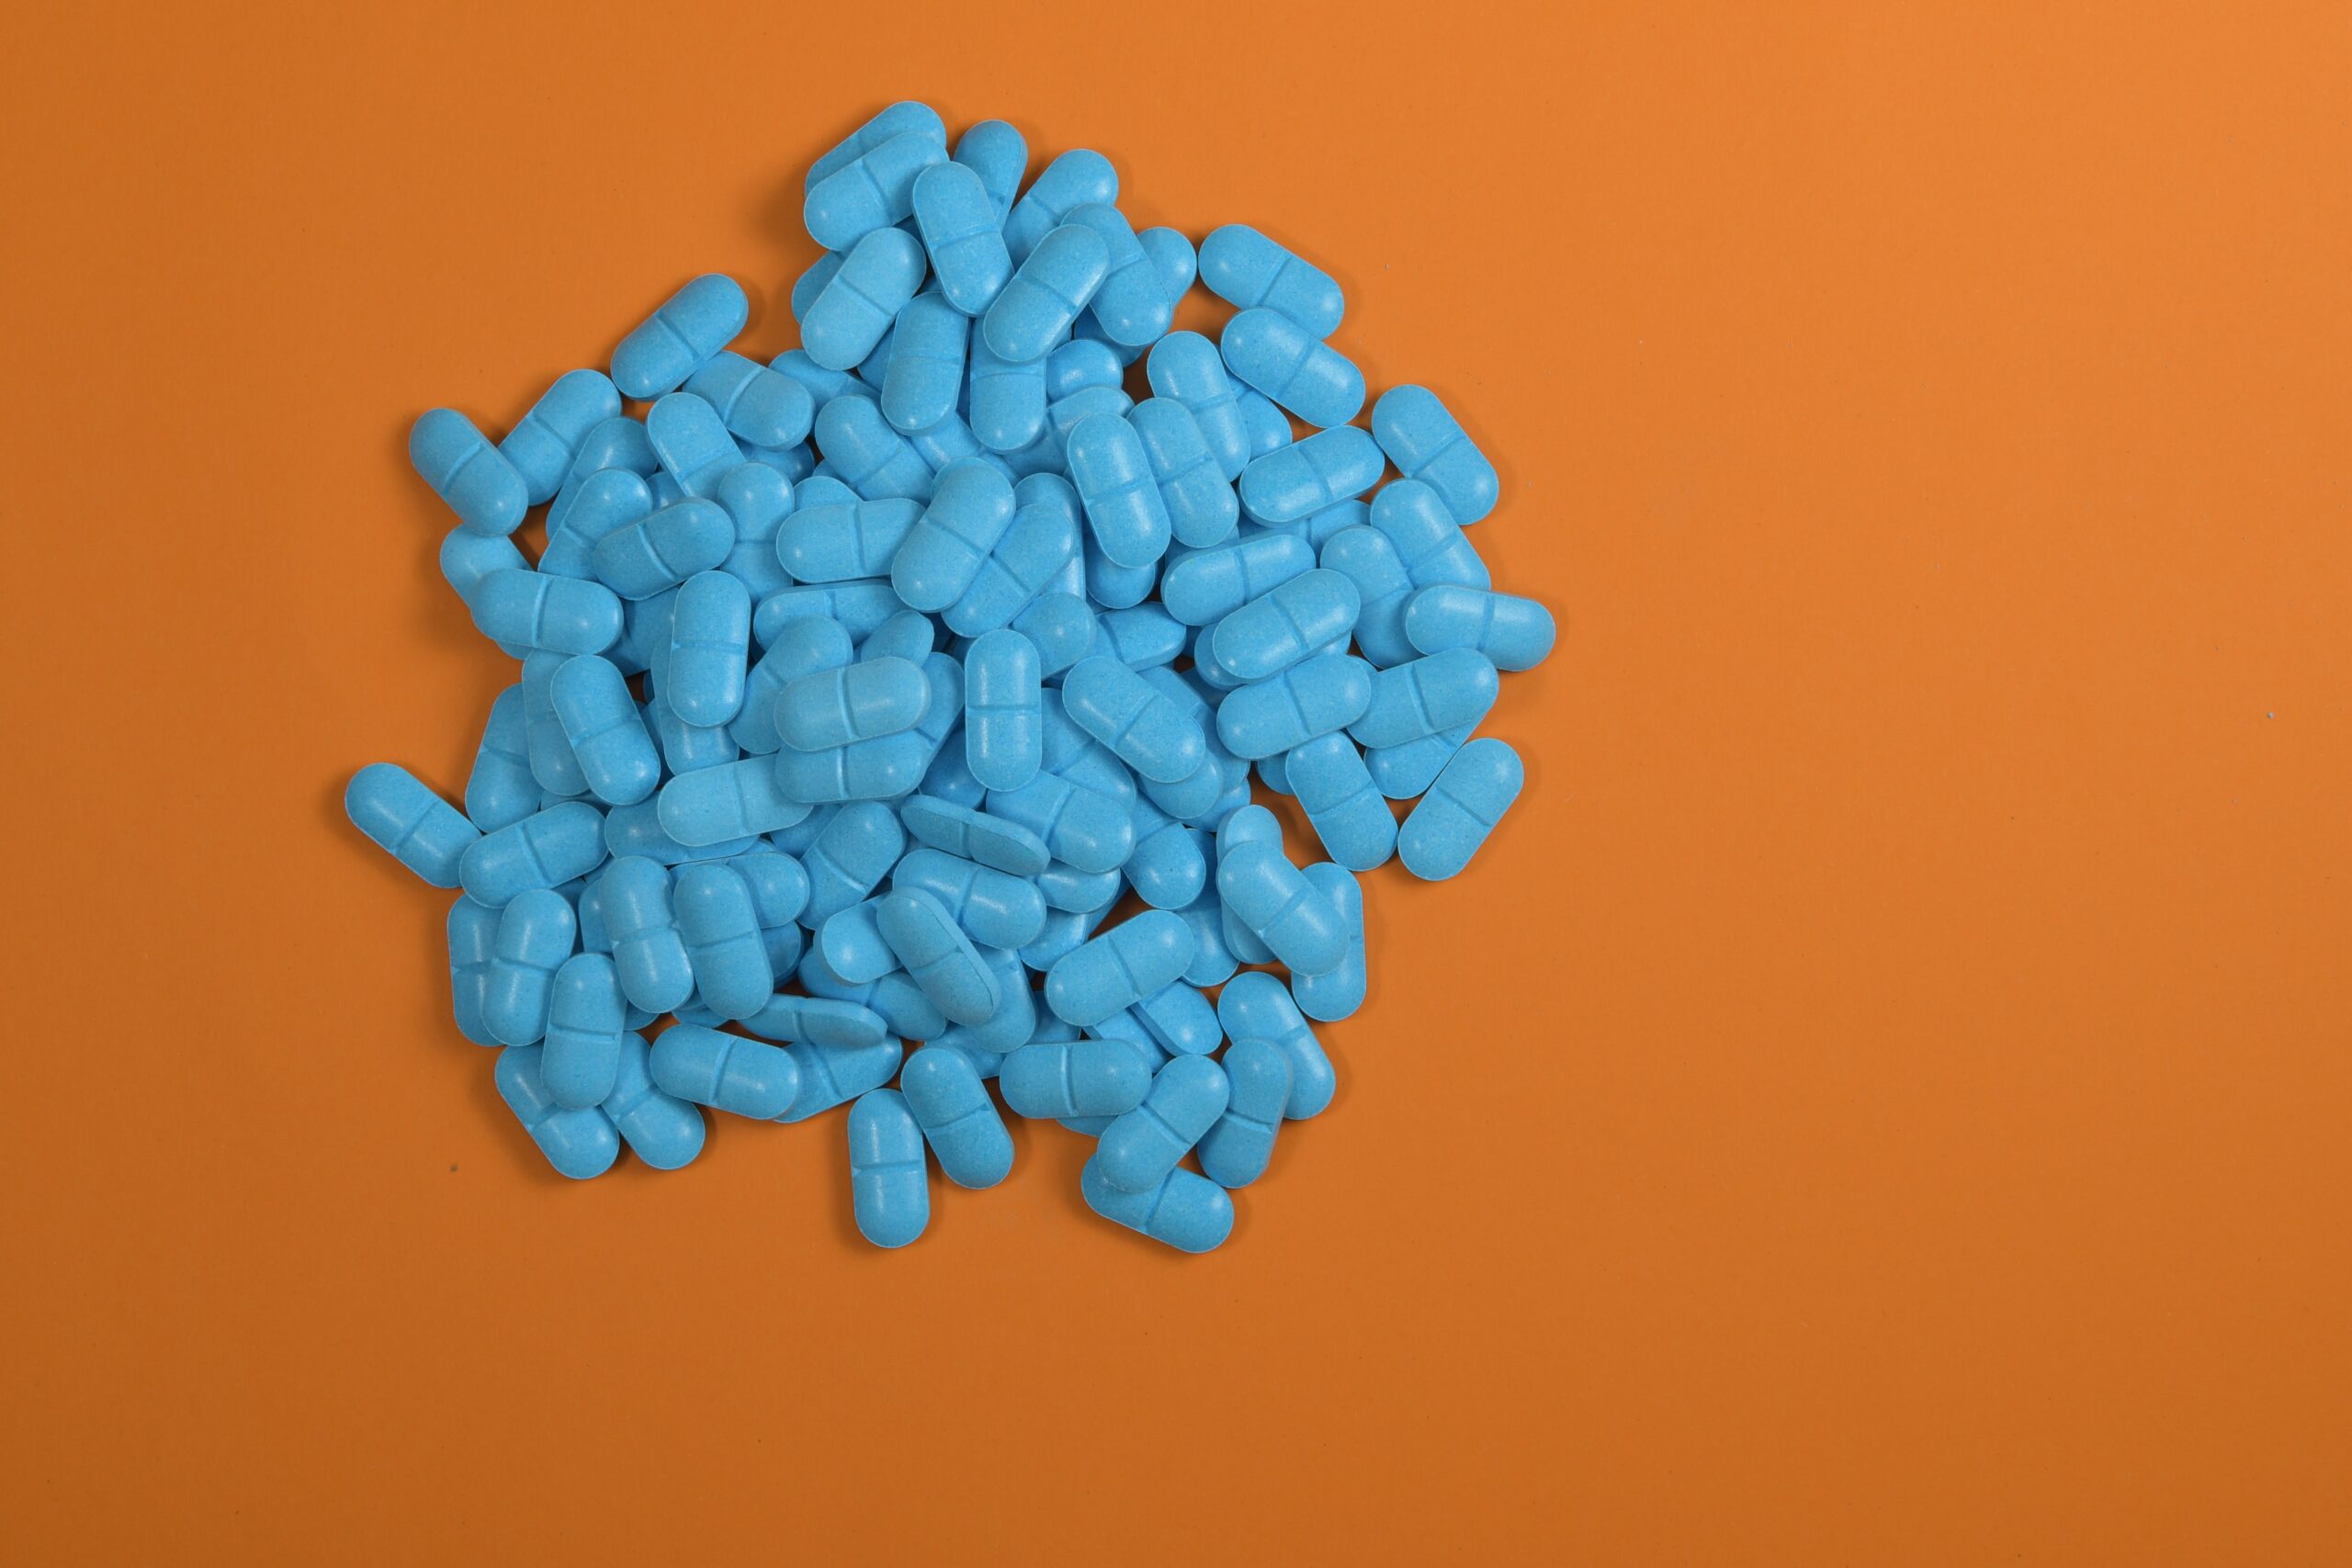 an image of medication representing klonopin